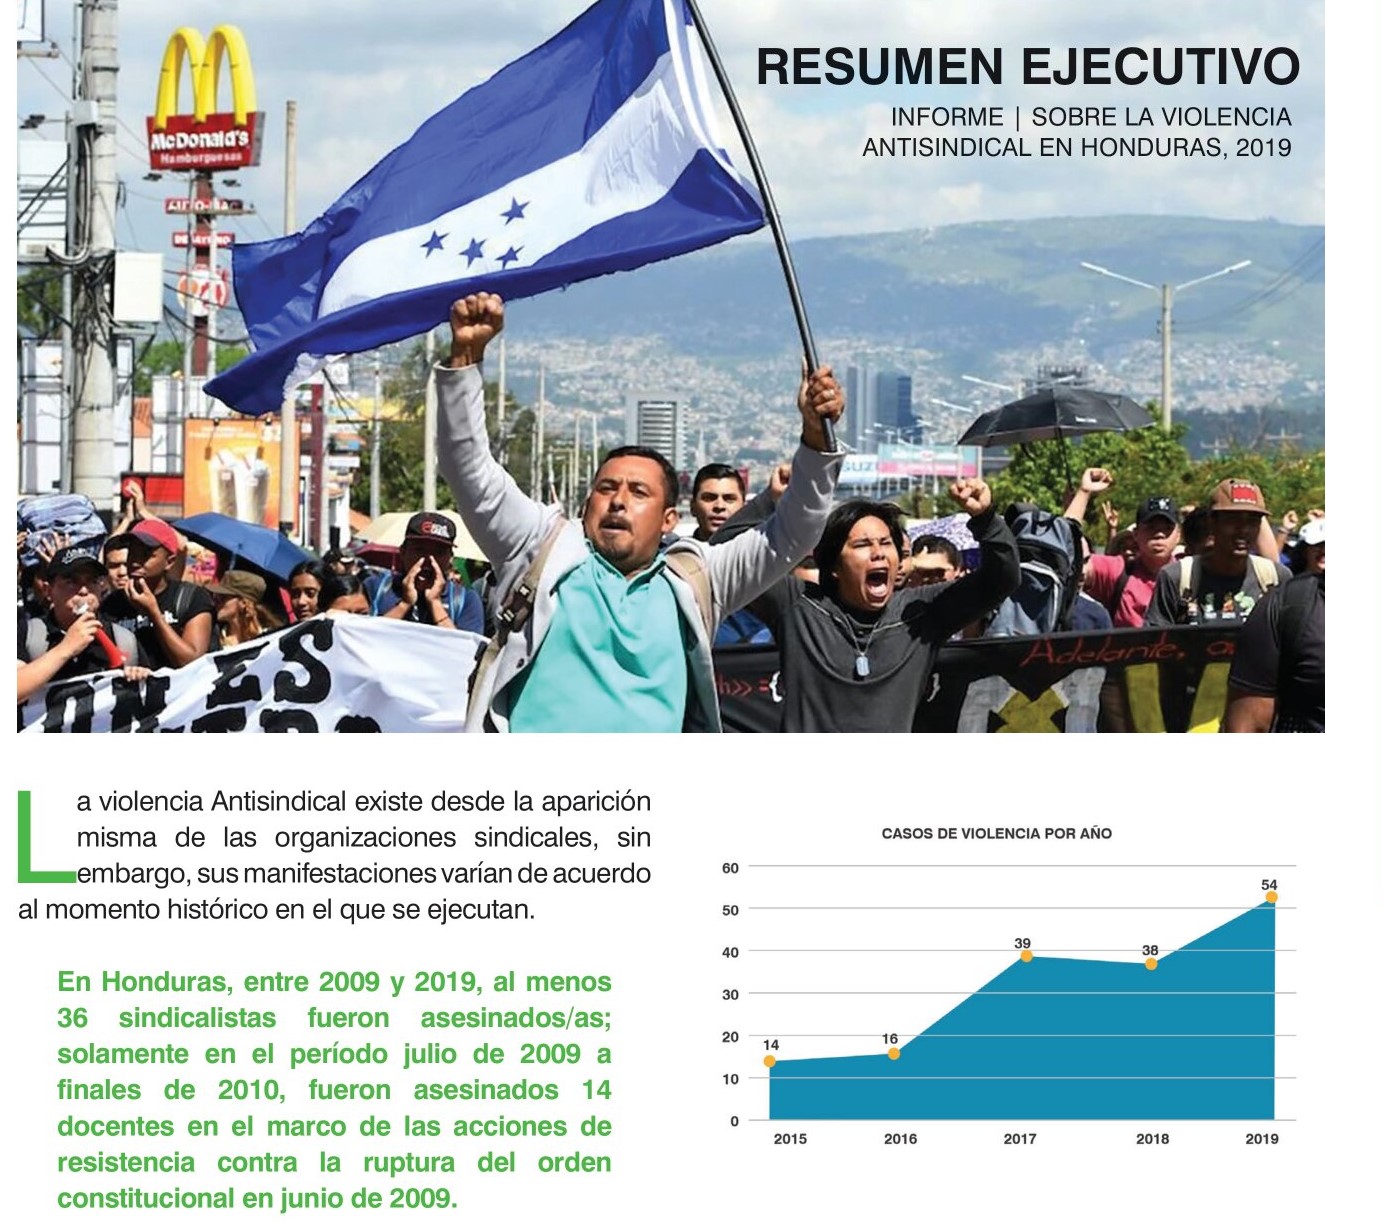 Honduras / Informe de la violencia antisindical